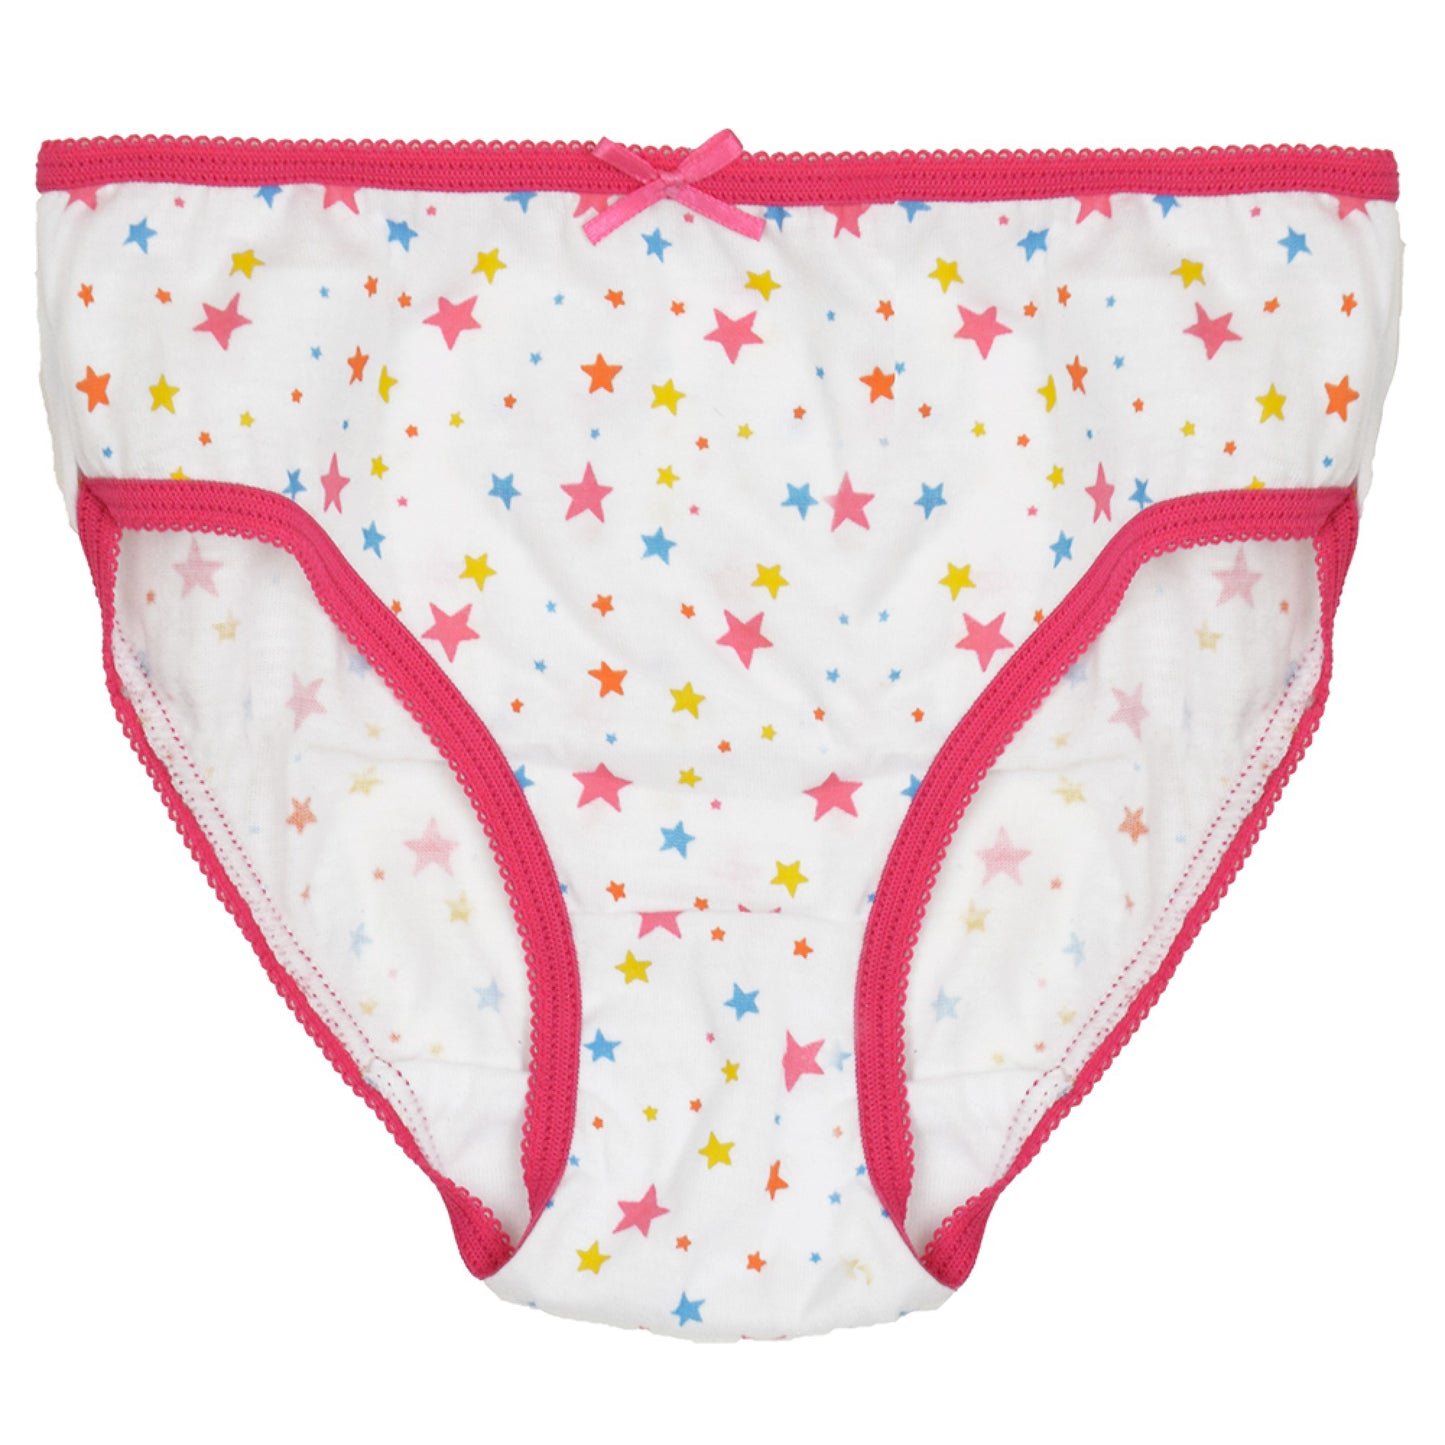 6 Pack Rainbow Pattern Girls Cotton Blend Knickers Panties Briefs Underwear